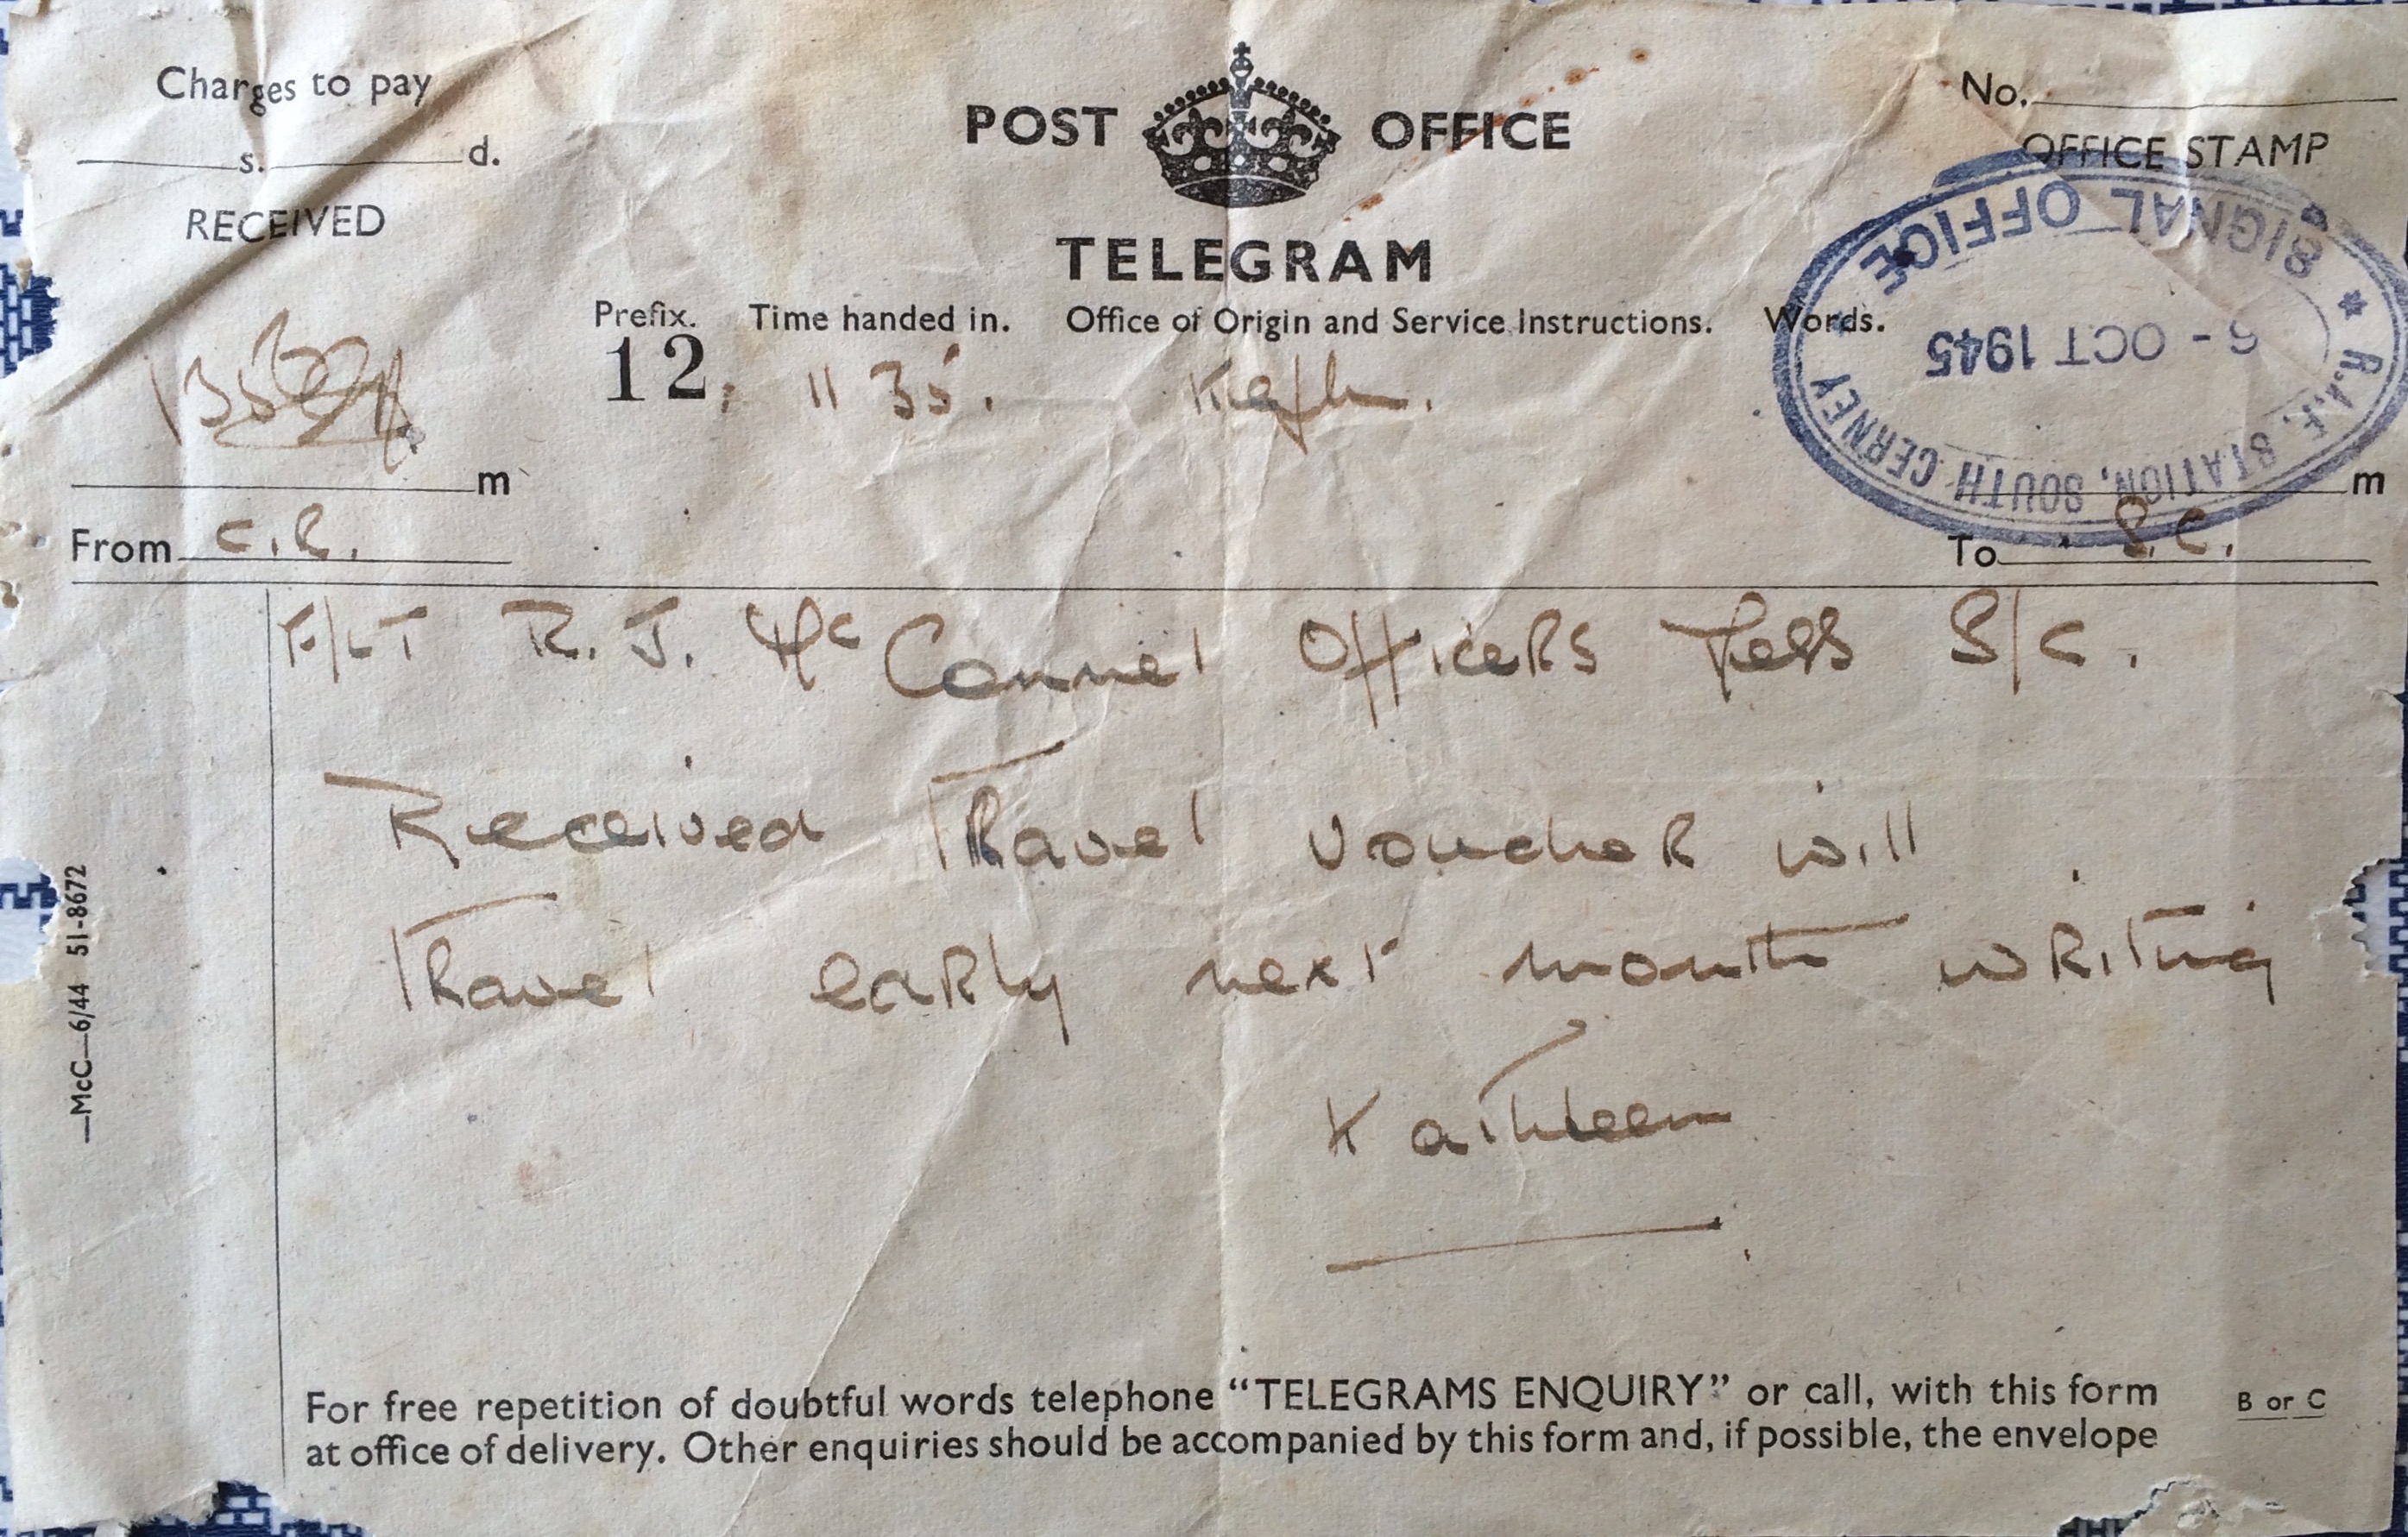 Telegram receipt 6 October 1945